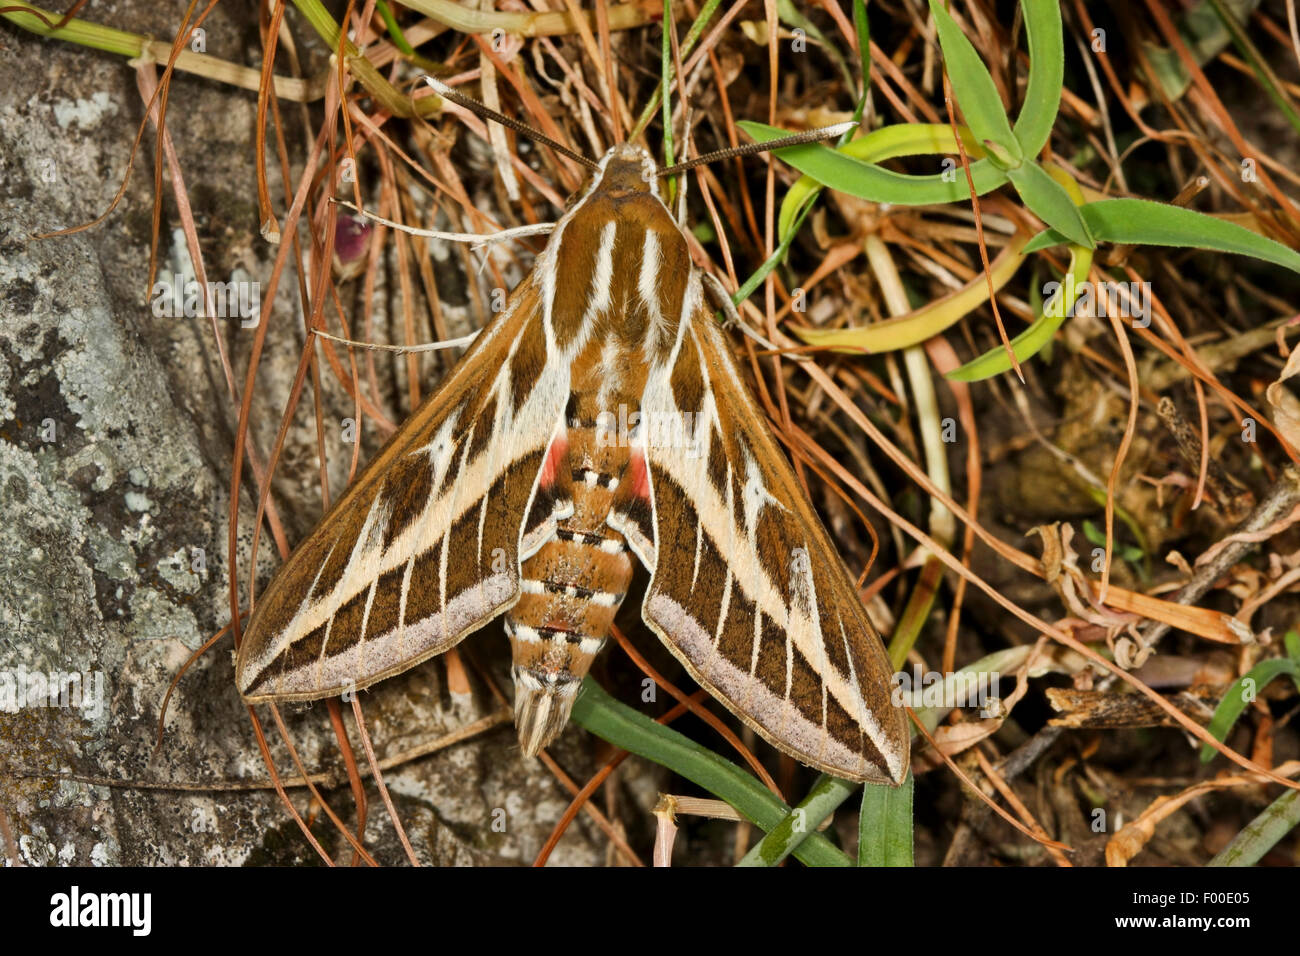 Striped Hawk-moth, Striped Hawkmoth (Hyles livornica, Hyles lineata, Celerio livornica, Celerio lineata), on grass Stock Photo